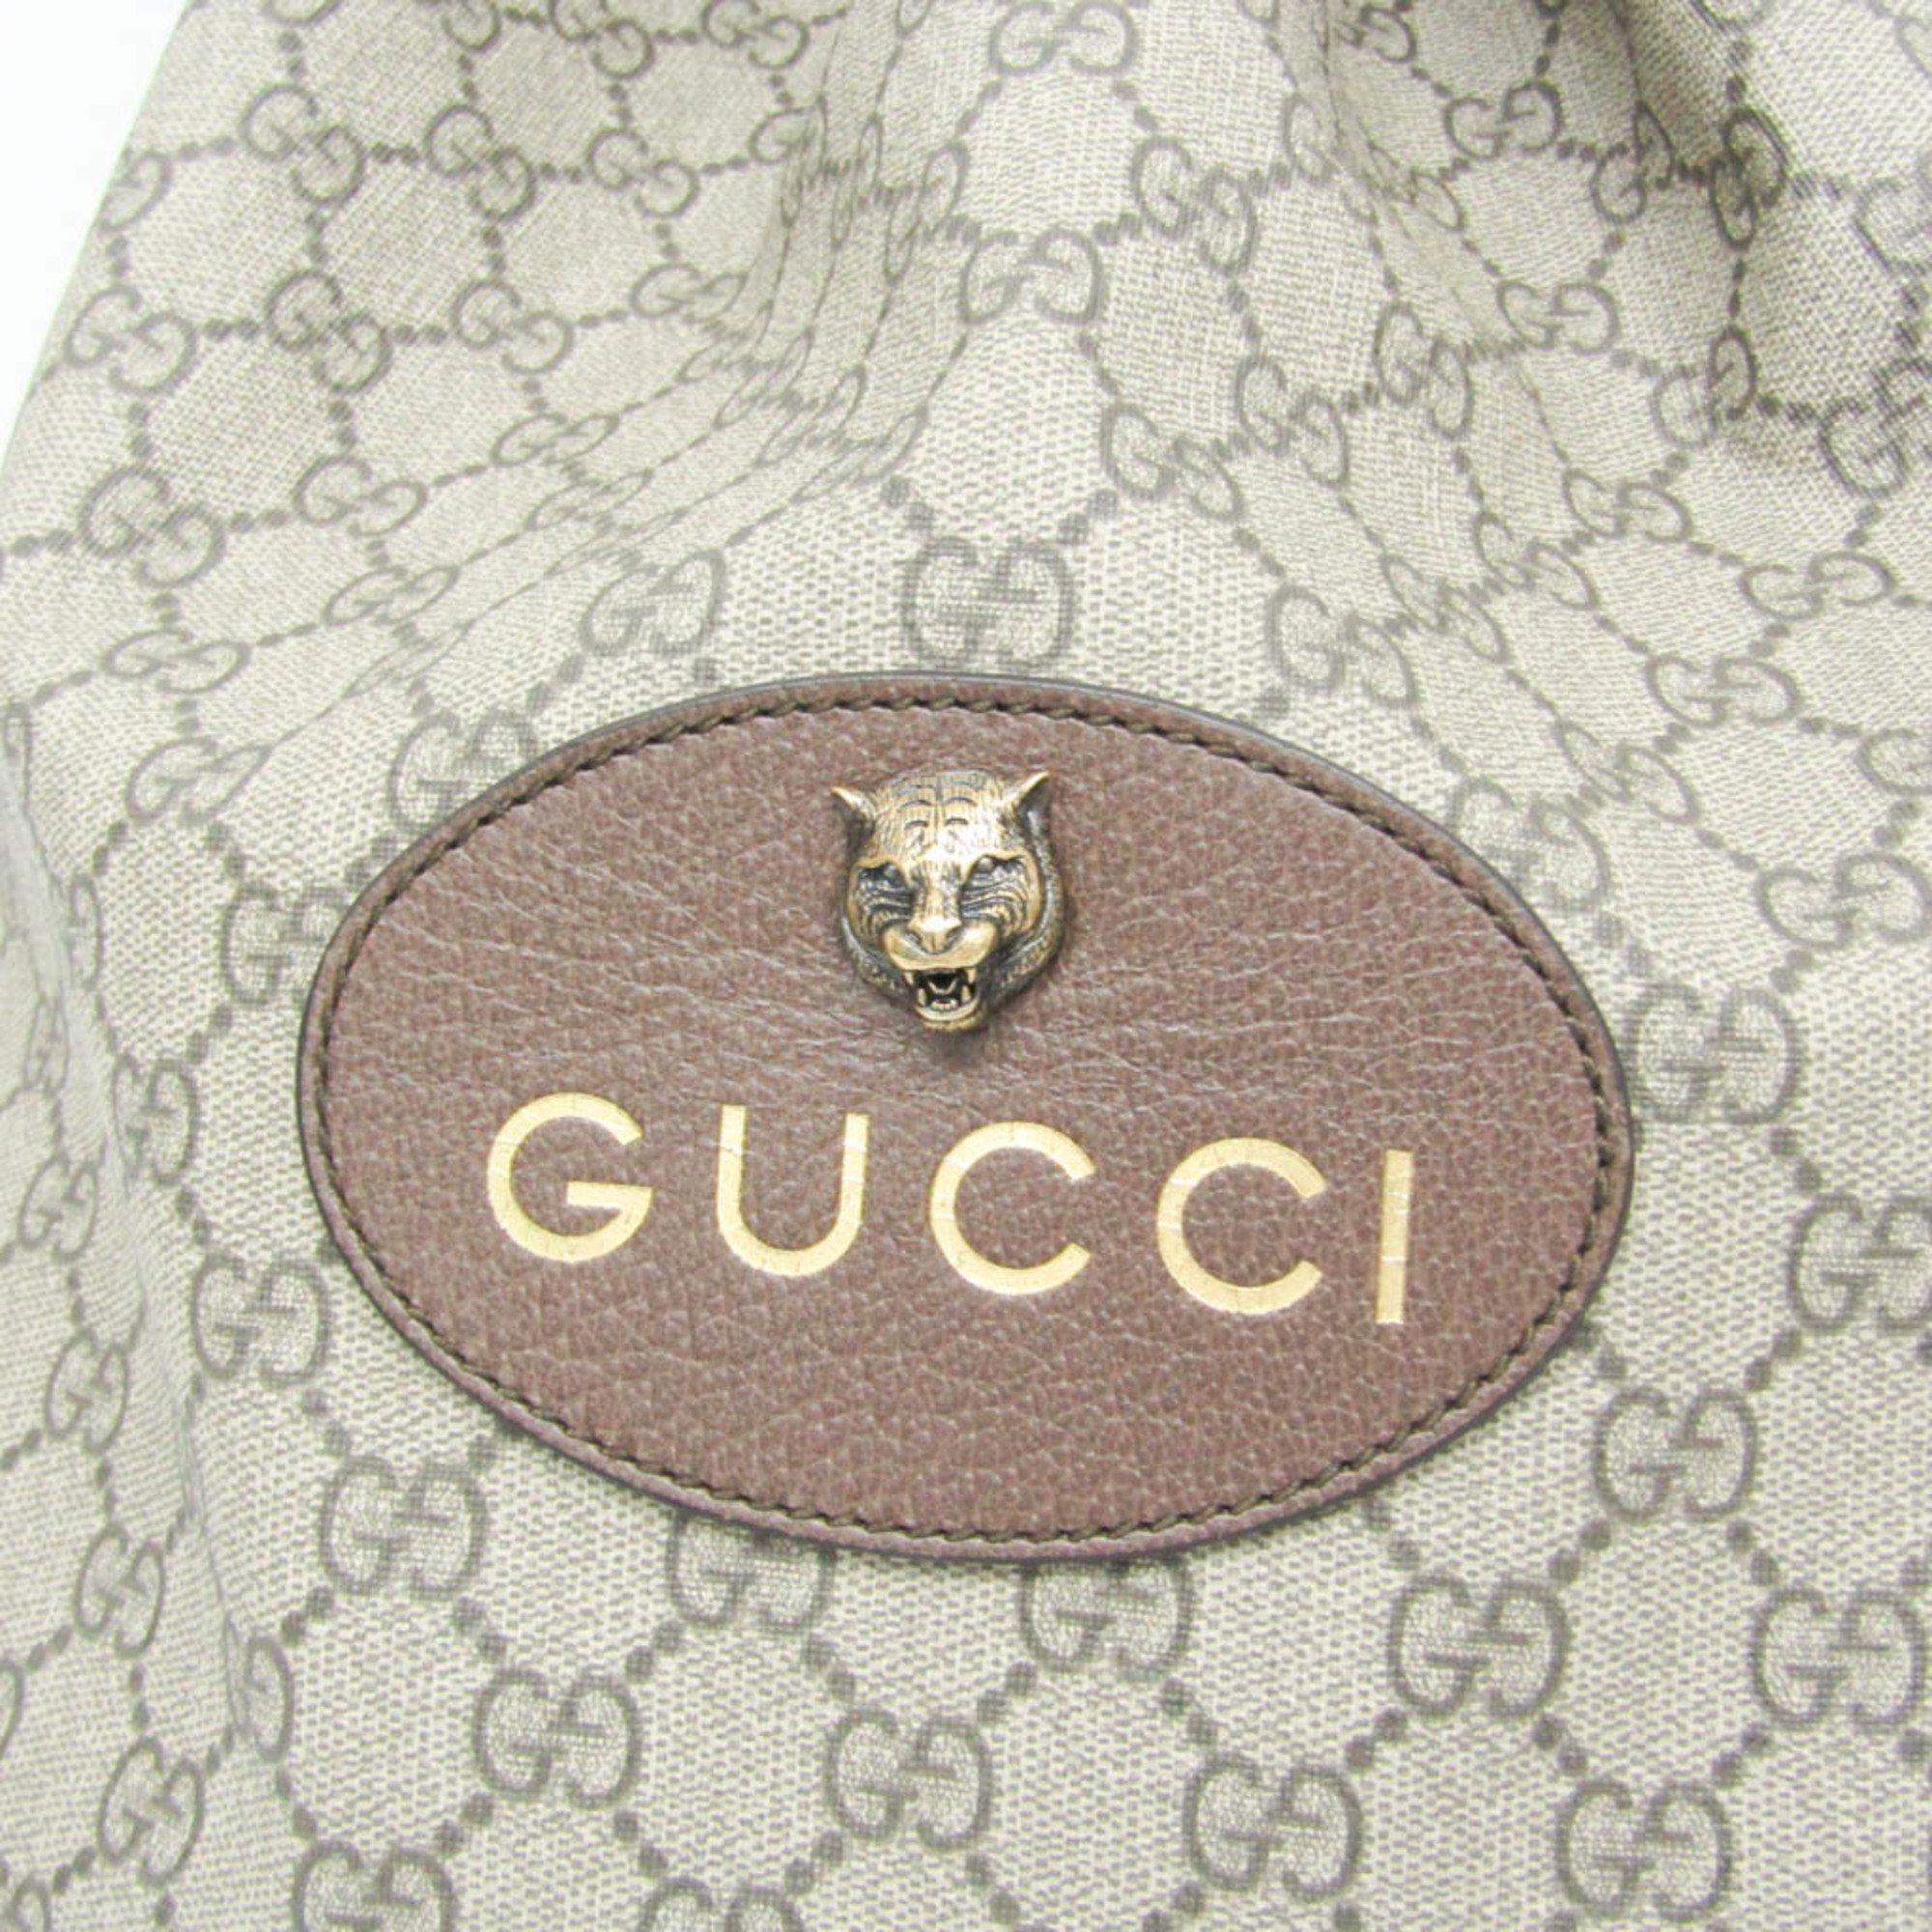 Gucci Drawstring 473872 Women,Men GG Supreme,Leather Backpack Beige,Dark Brown,Yellow